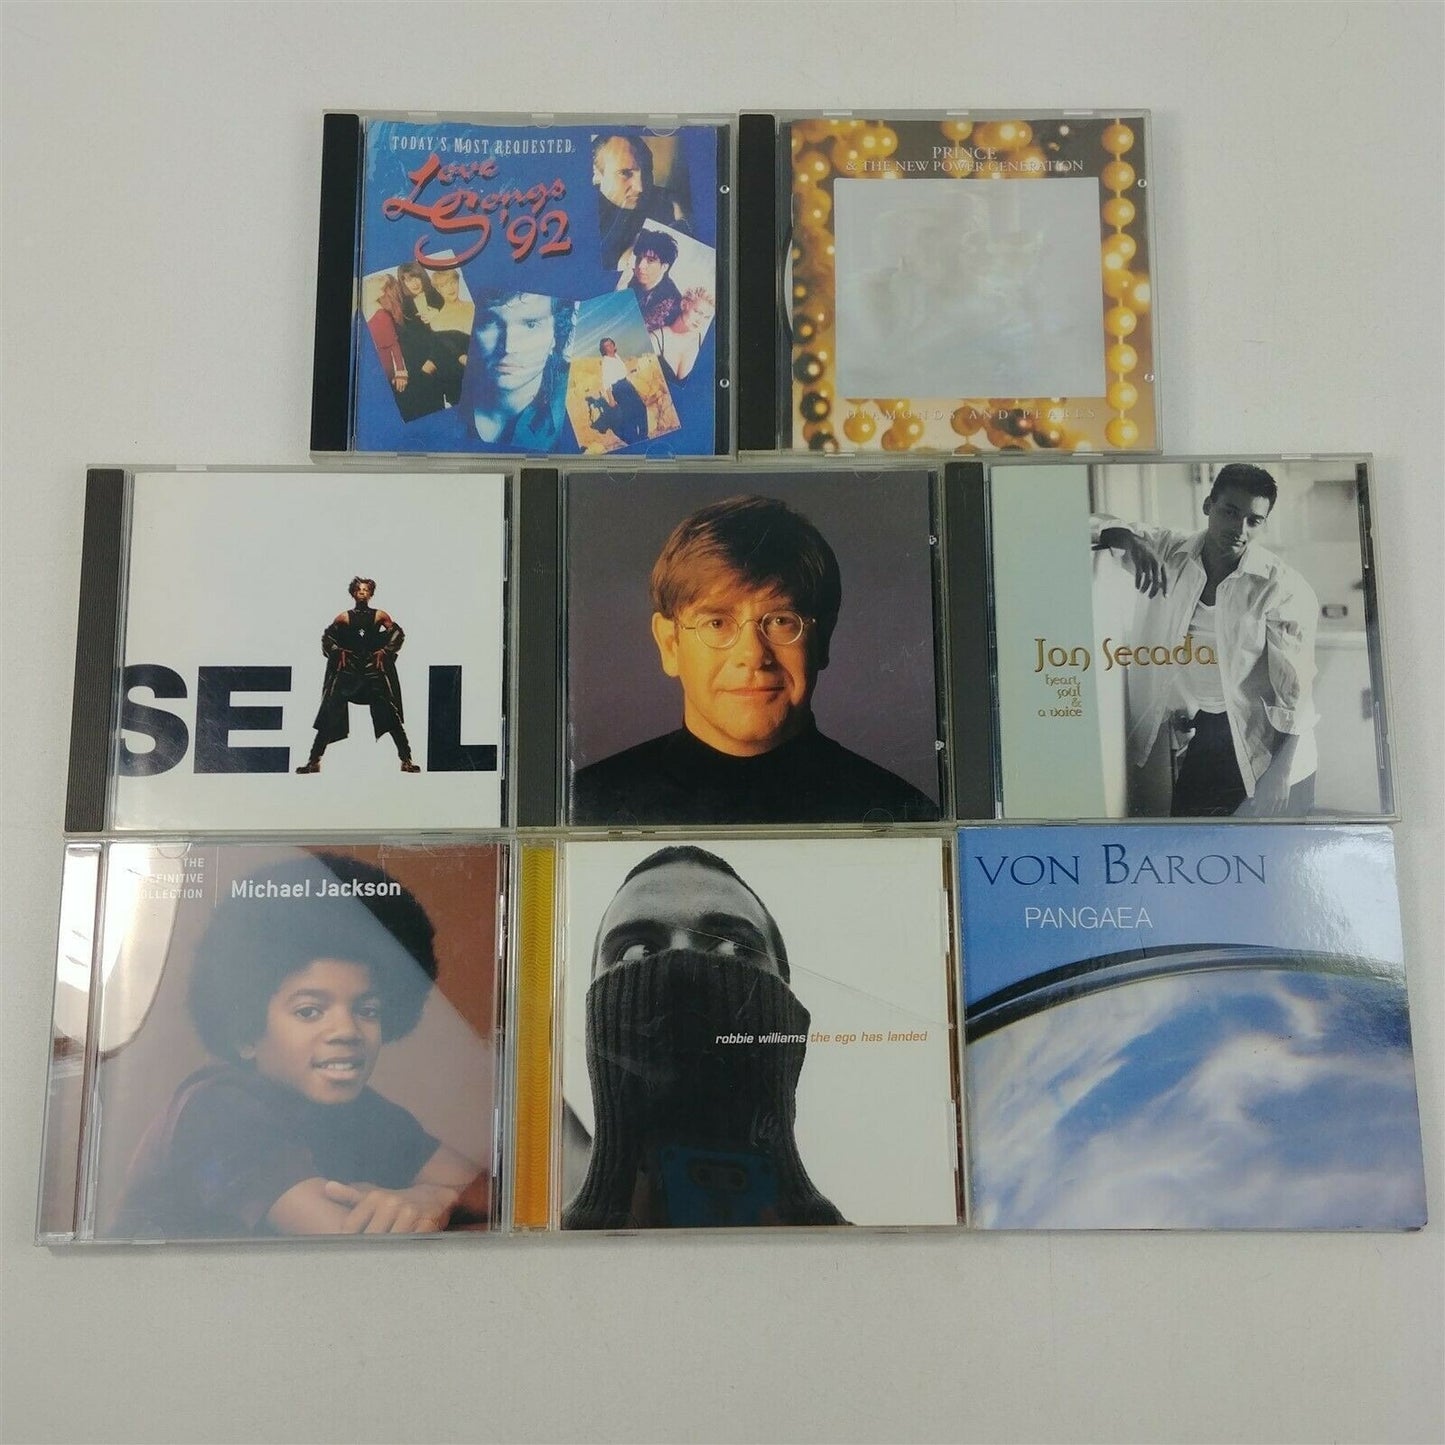 8 Pop Men CDs Seal Elton John Von Baron Prince and the N.P.G Michael Jackson